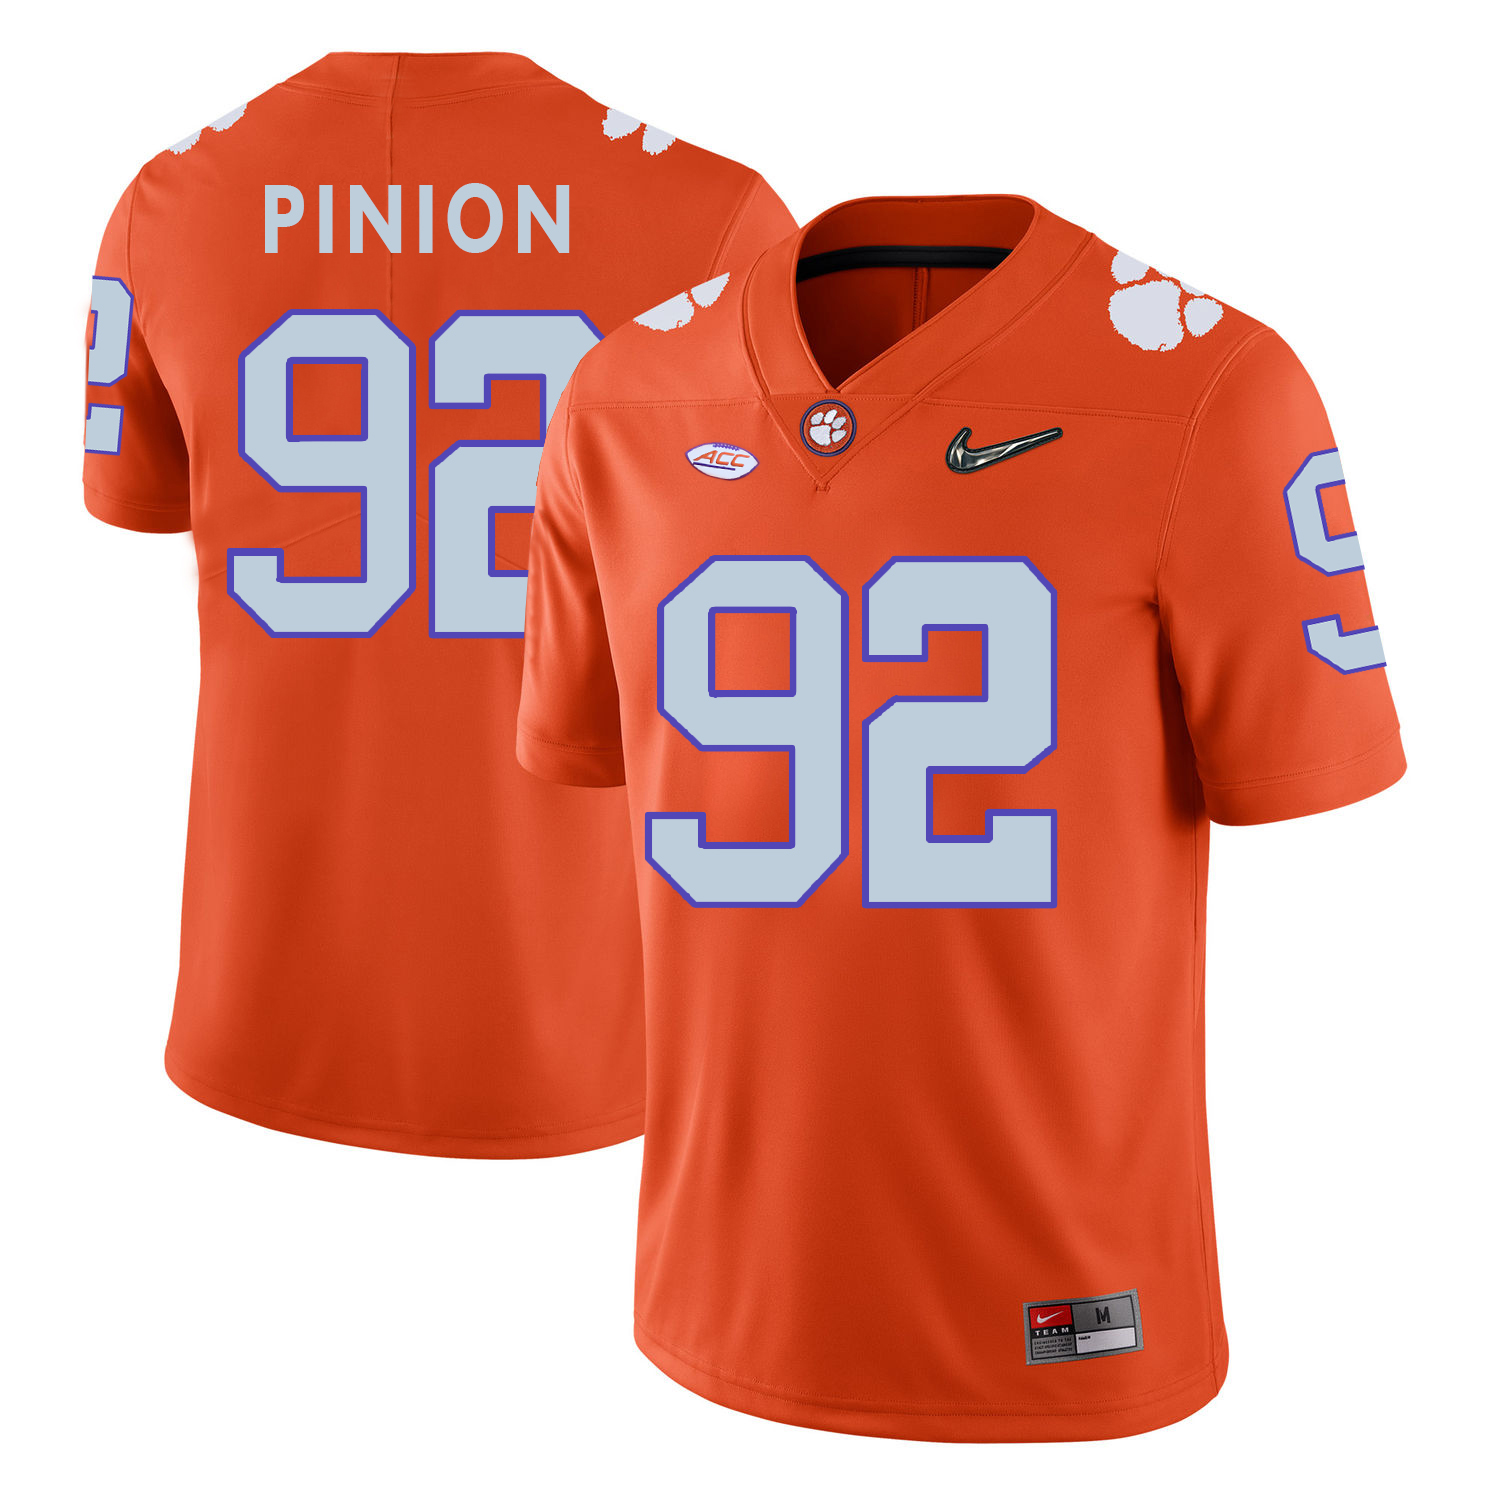 Clemson Tigers 92 Bradley Pinion Orange With Diamond Logo College Football Jersey